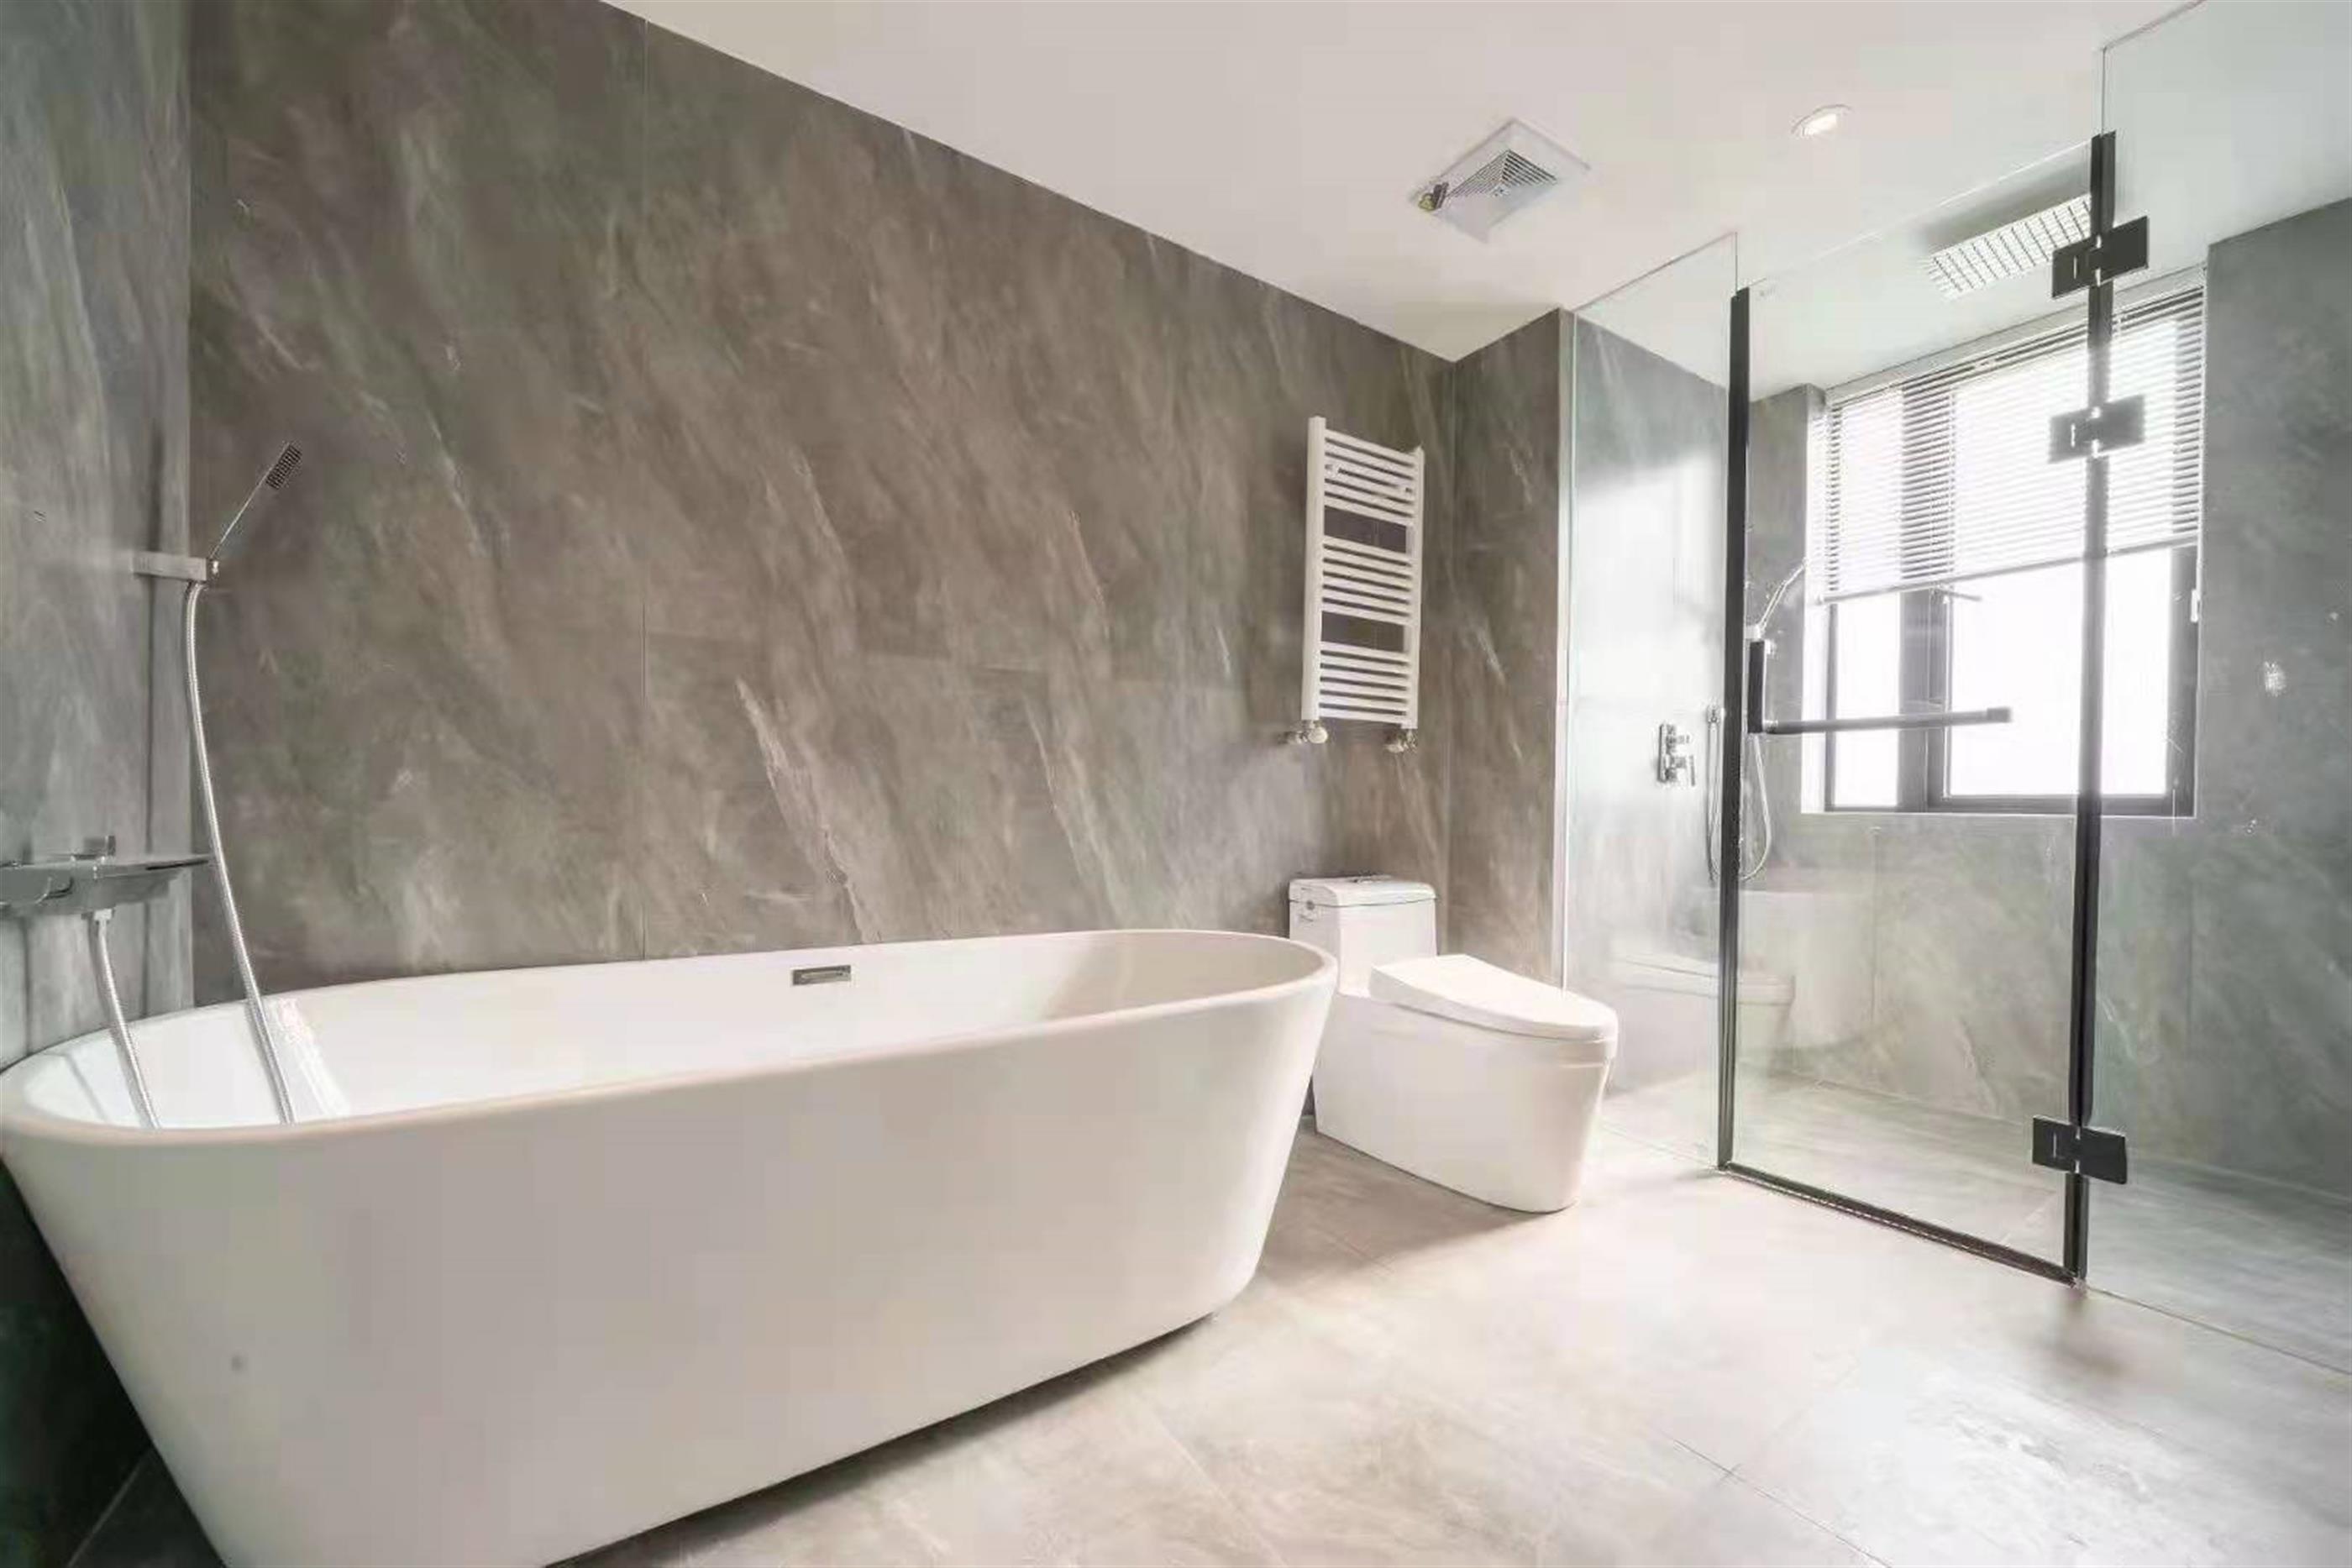 Large bathtub Affordable Modern 4-floor 4BR House for Rent in Qingpu Shanghai